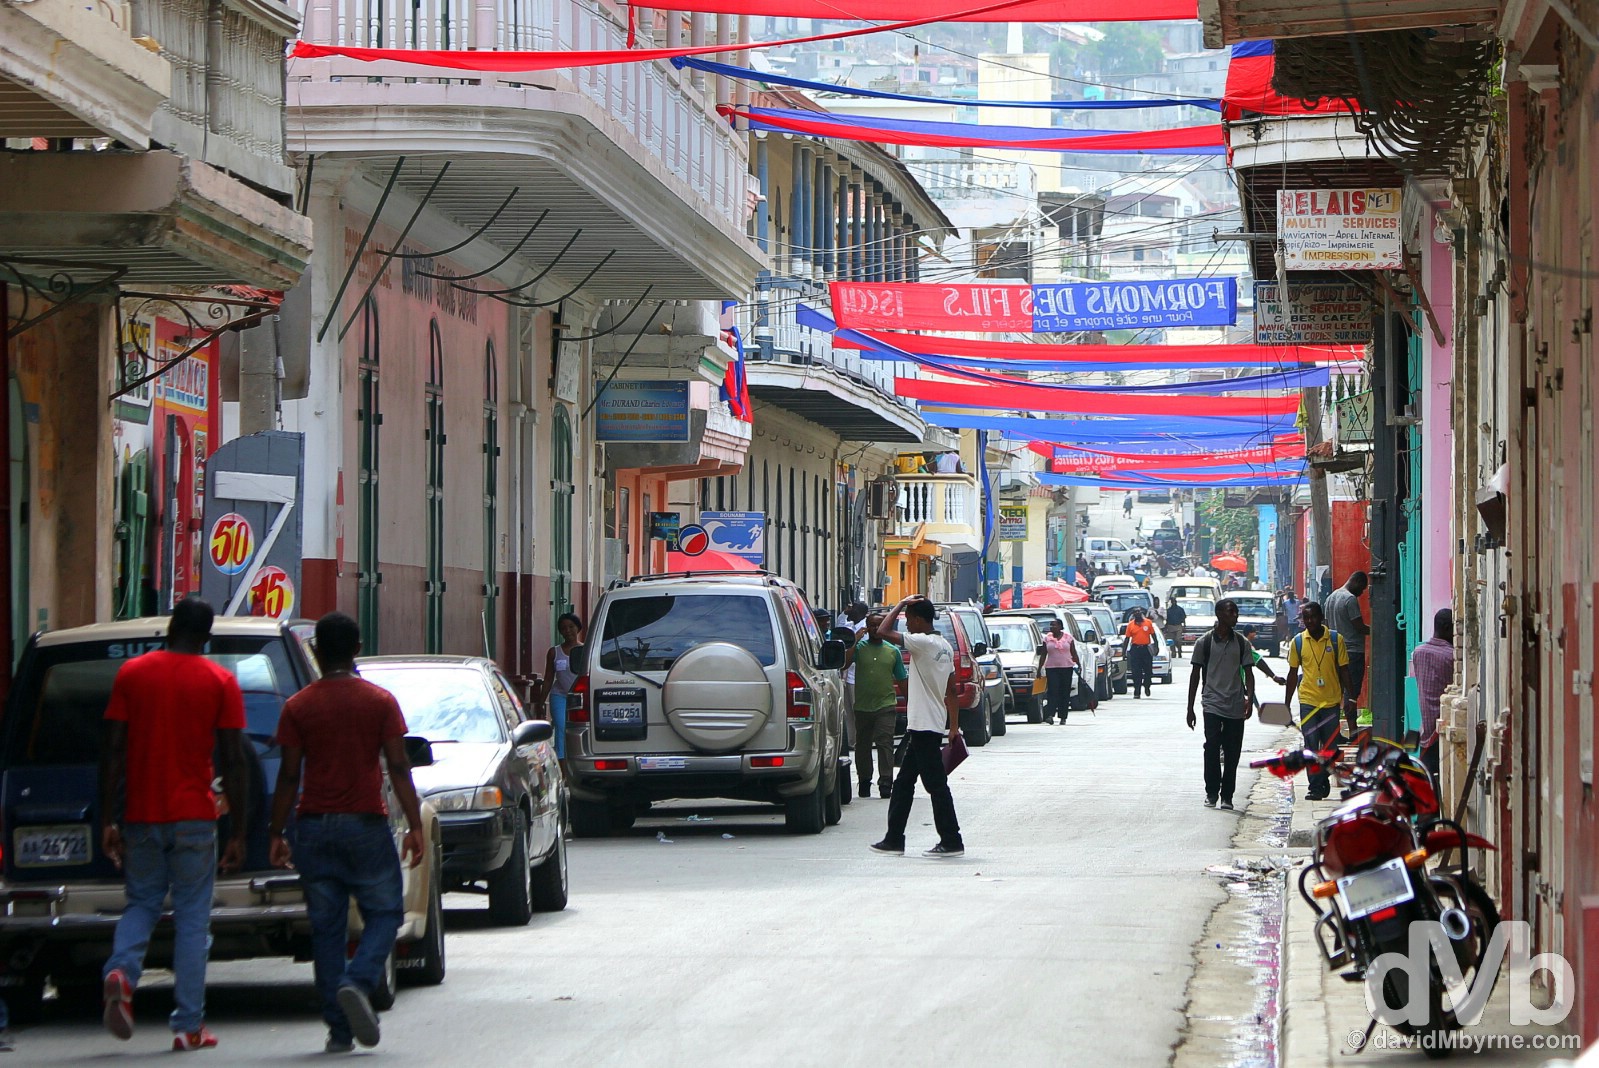 On the streets of Cap-Haïtien, northern Haiti, Hispaniola, Greater Antilles. May 22, 2015.